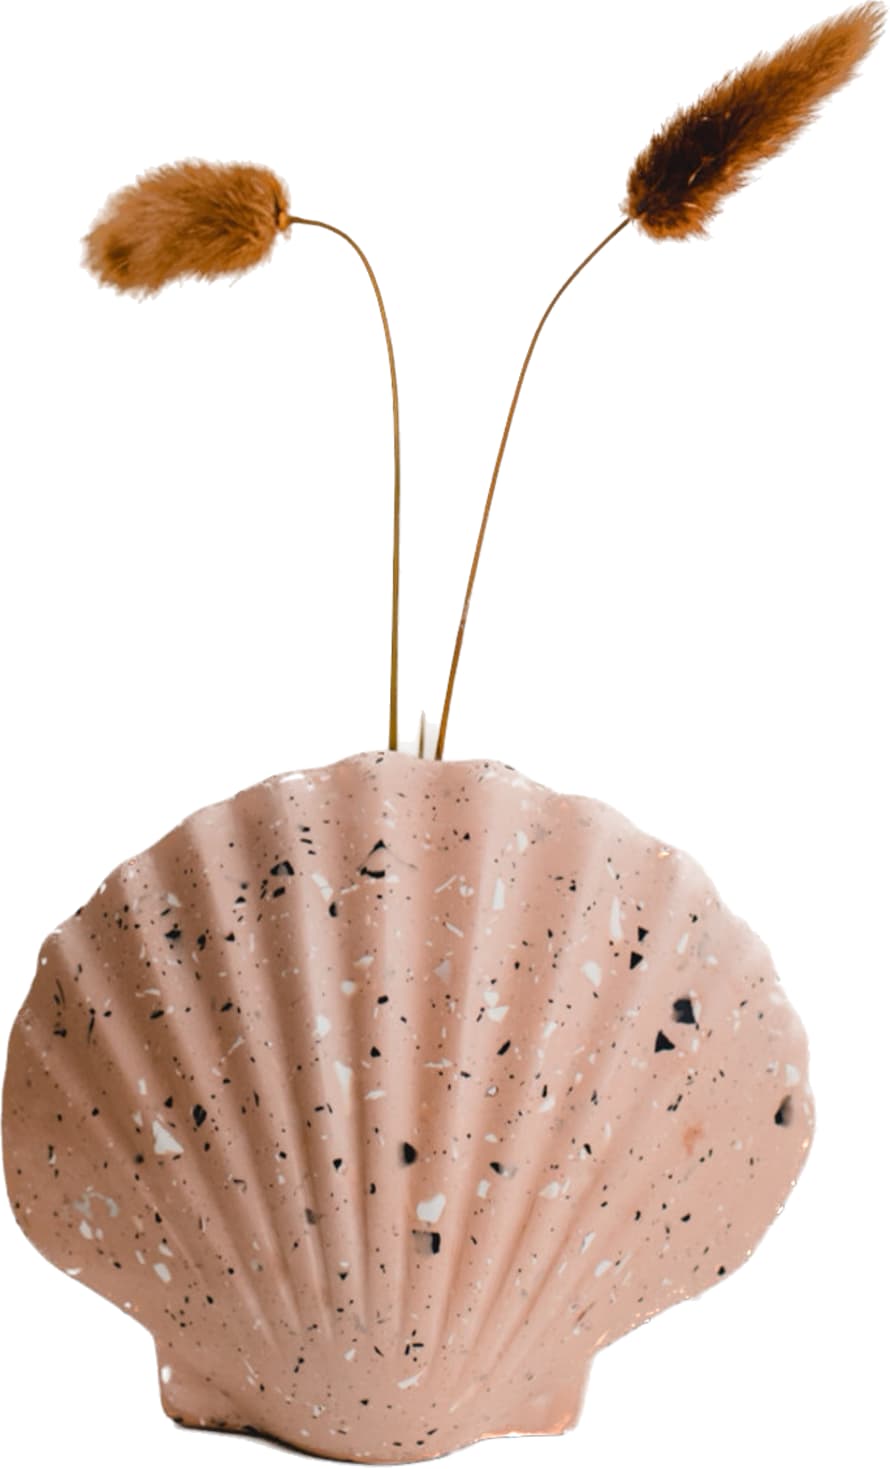 Badger & Birch Scallop Shell Vase - Pale Terracotta Terrazzo